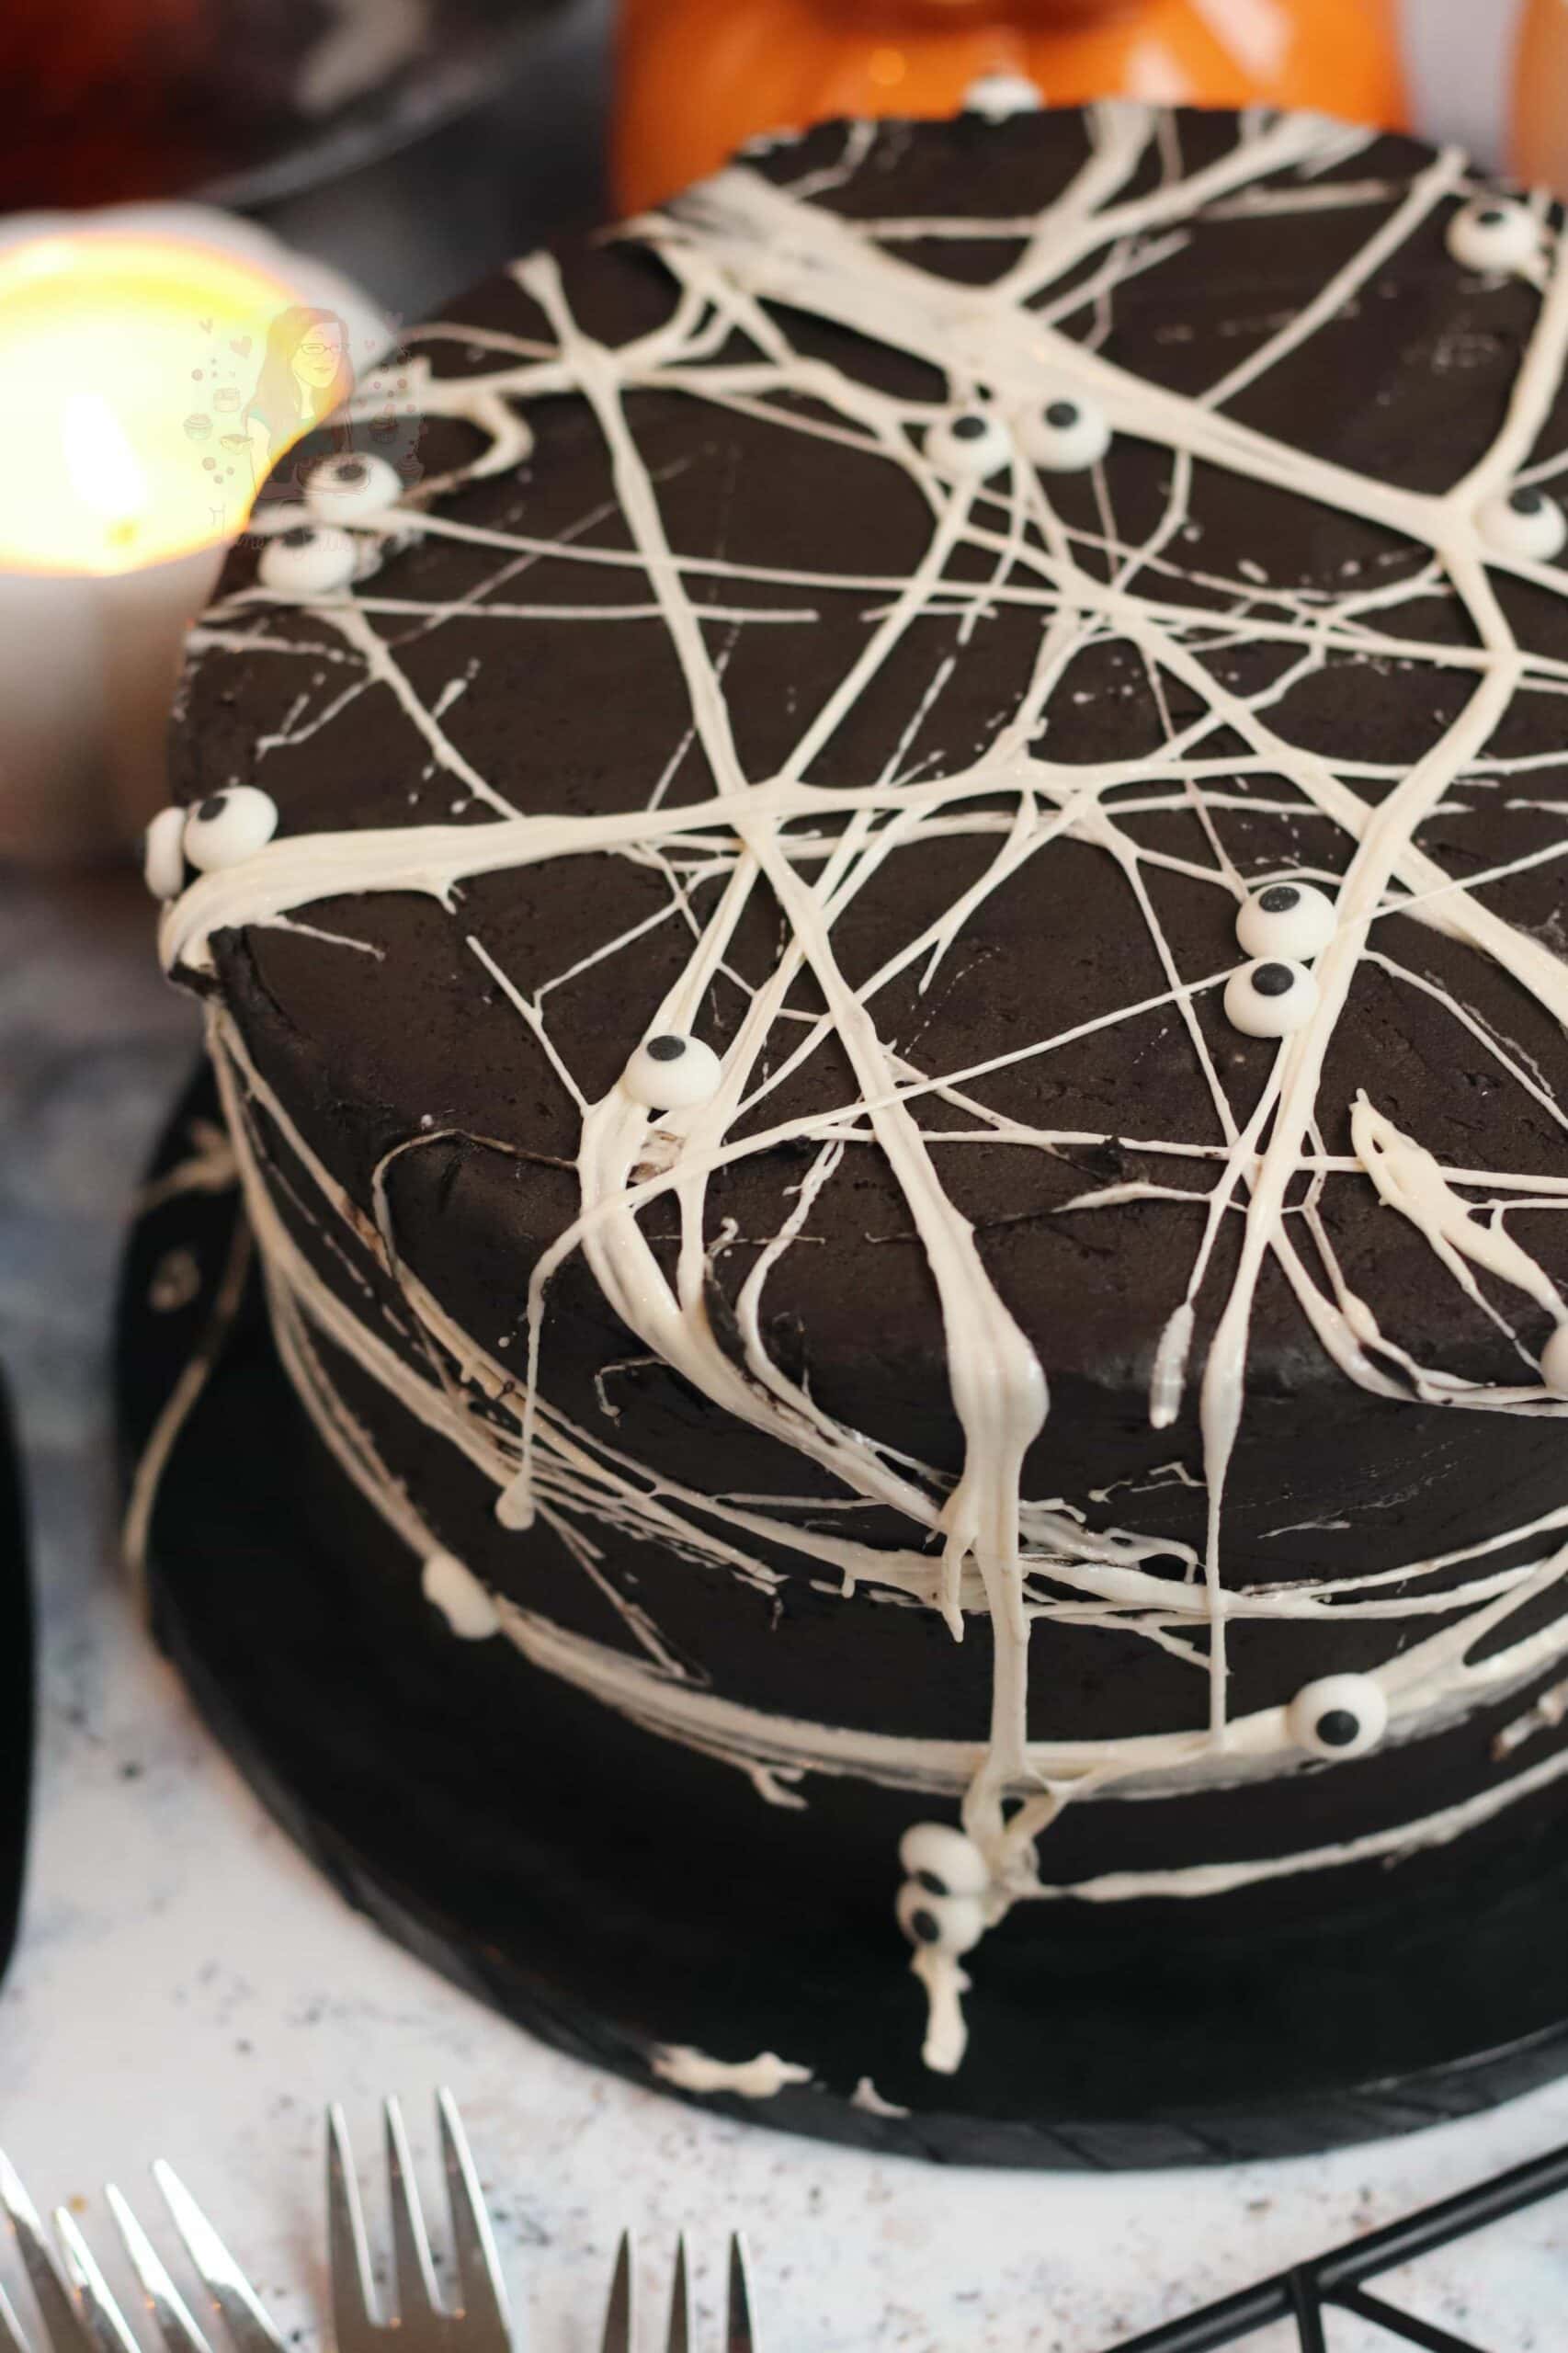 Spider web cake - Keuchen Paradise